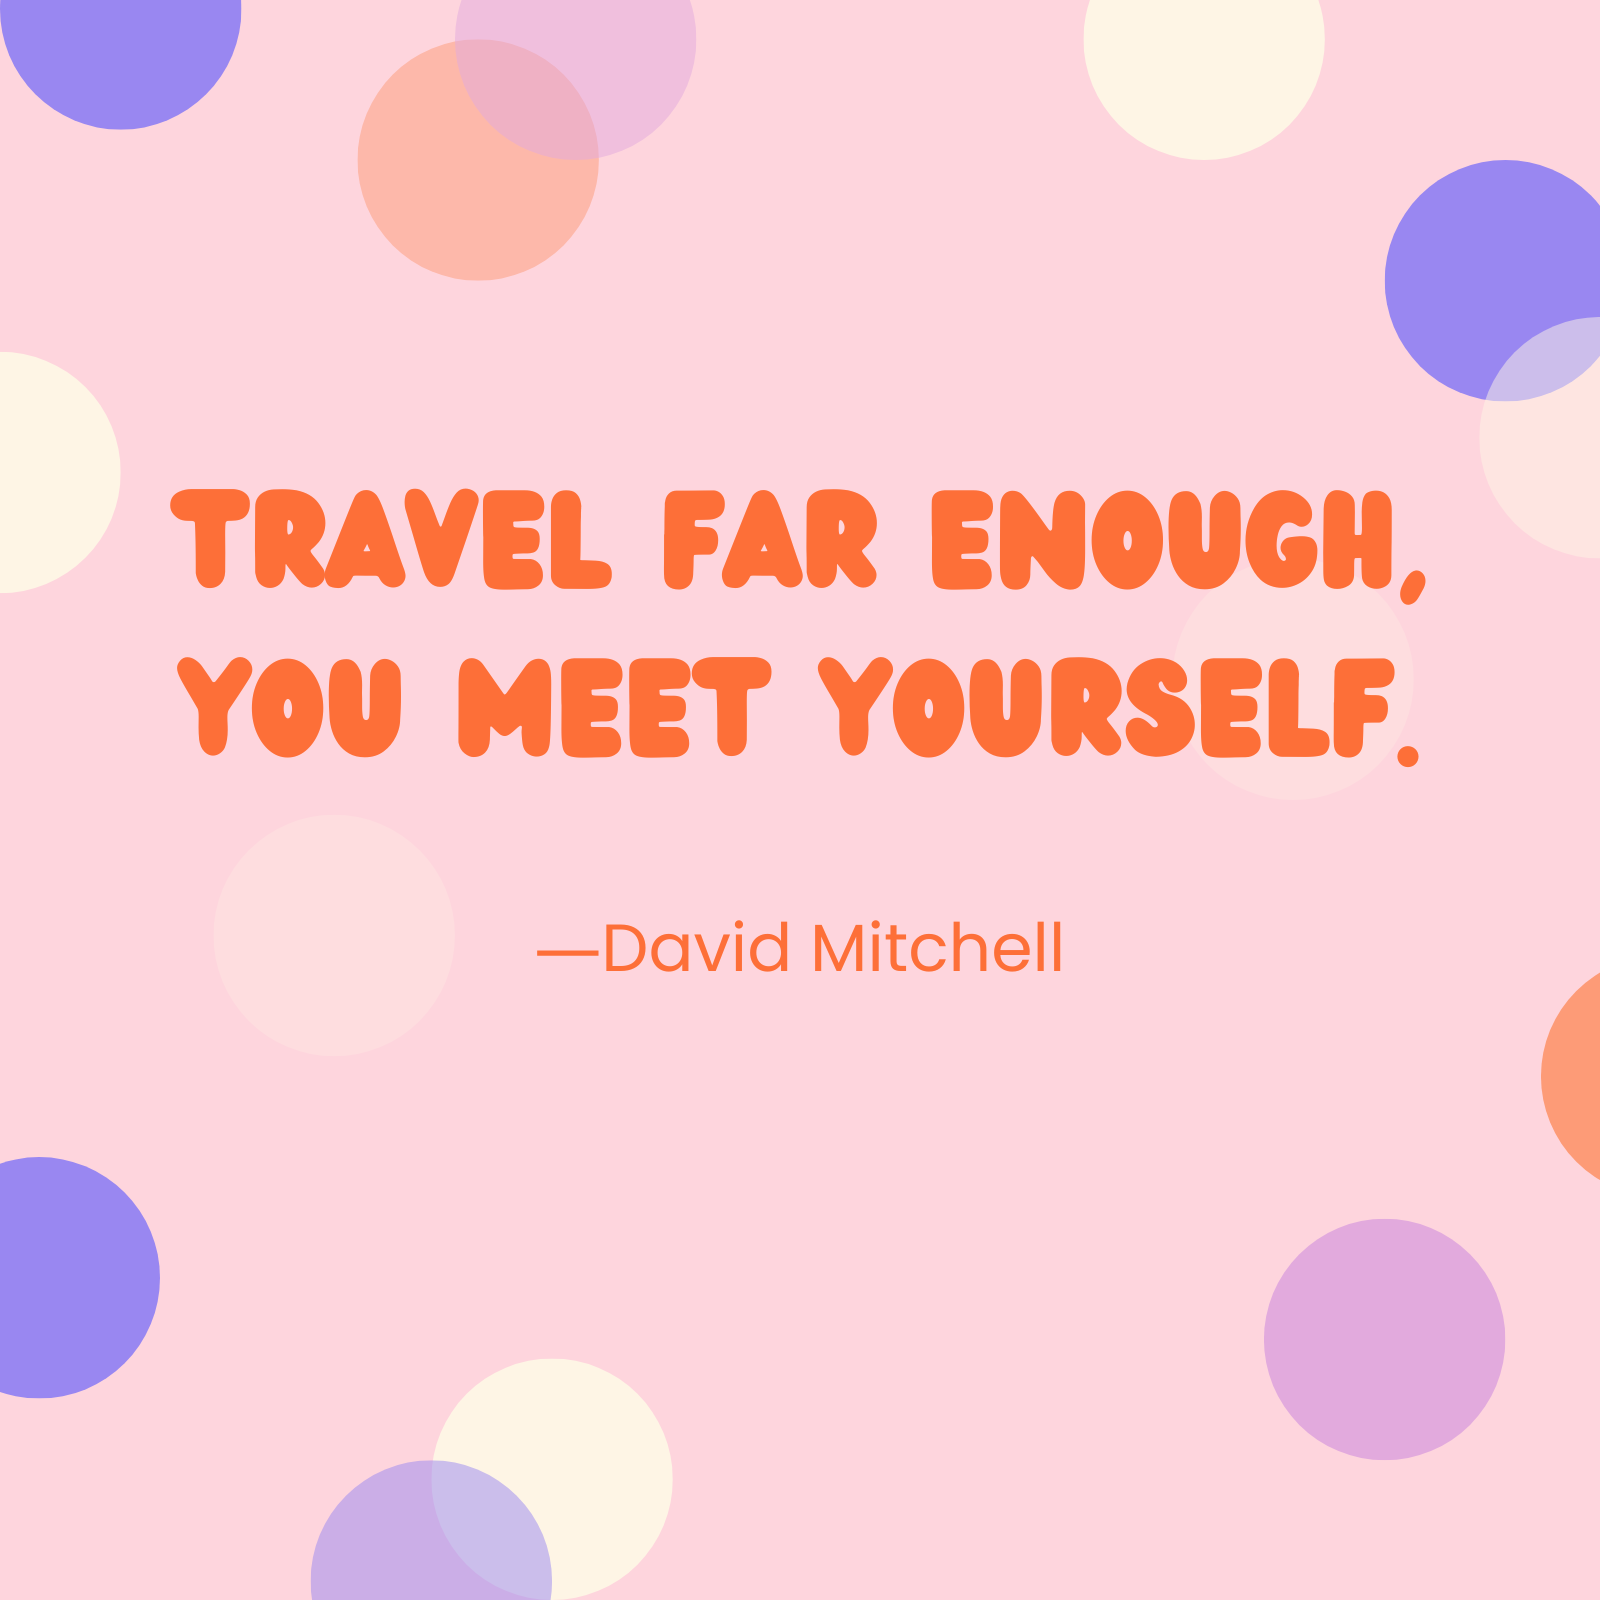 <p>"Travel far enough, you meet yourself." —David Mitchell</p>